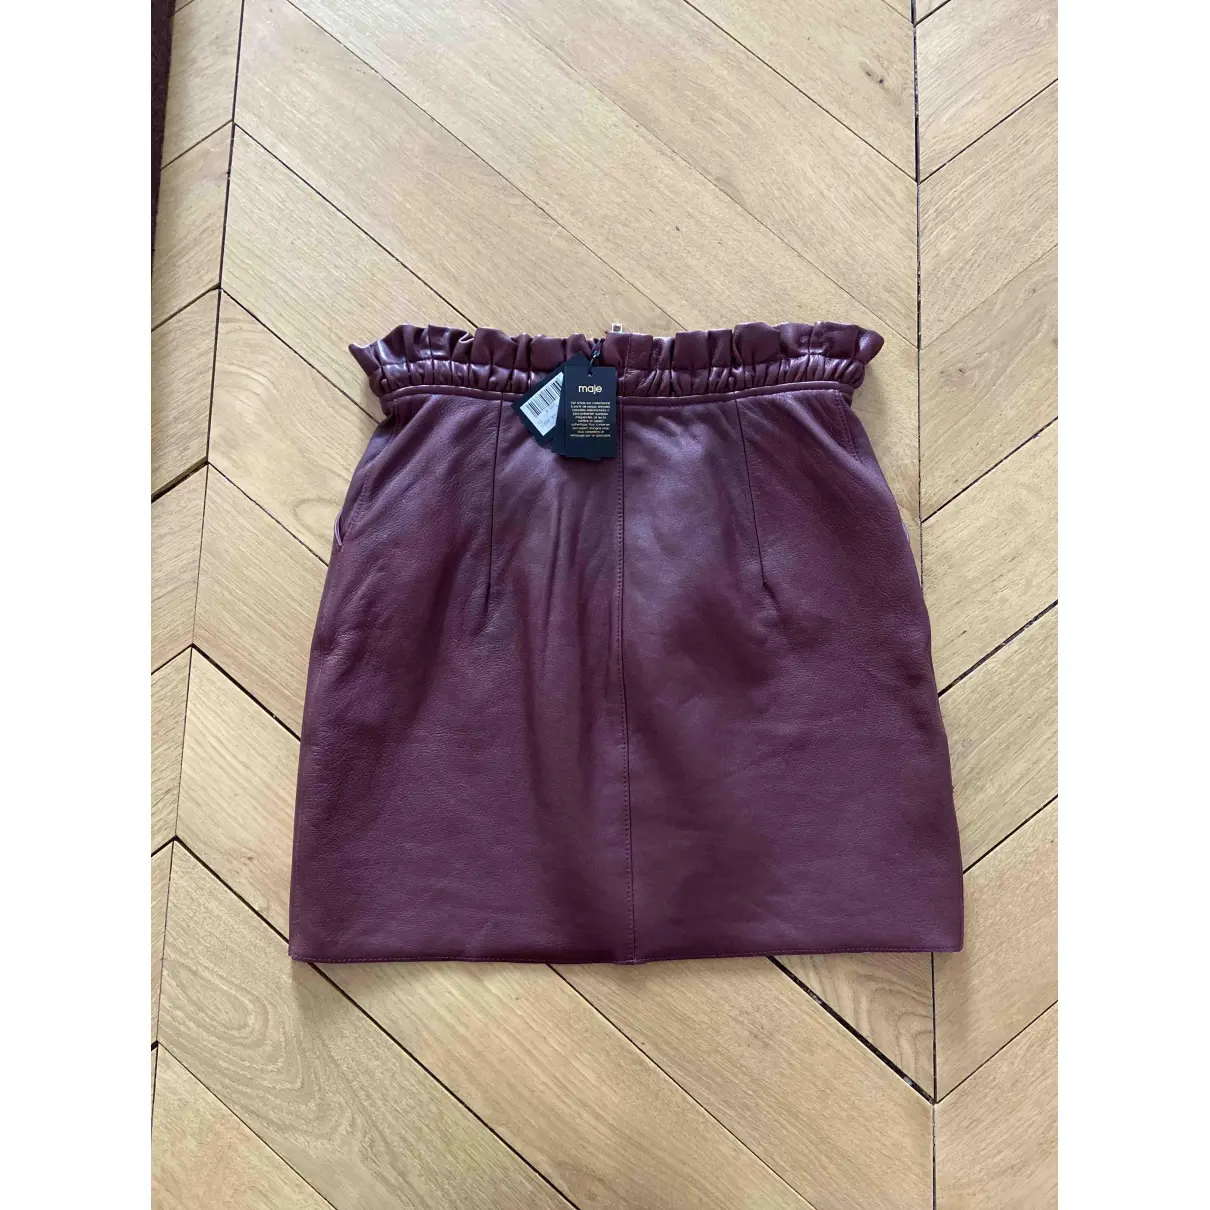 Buy Maje Leather mini skirt online